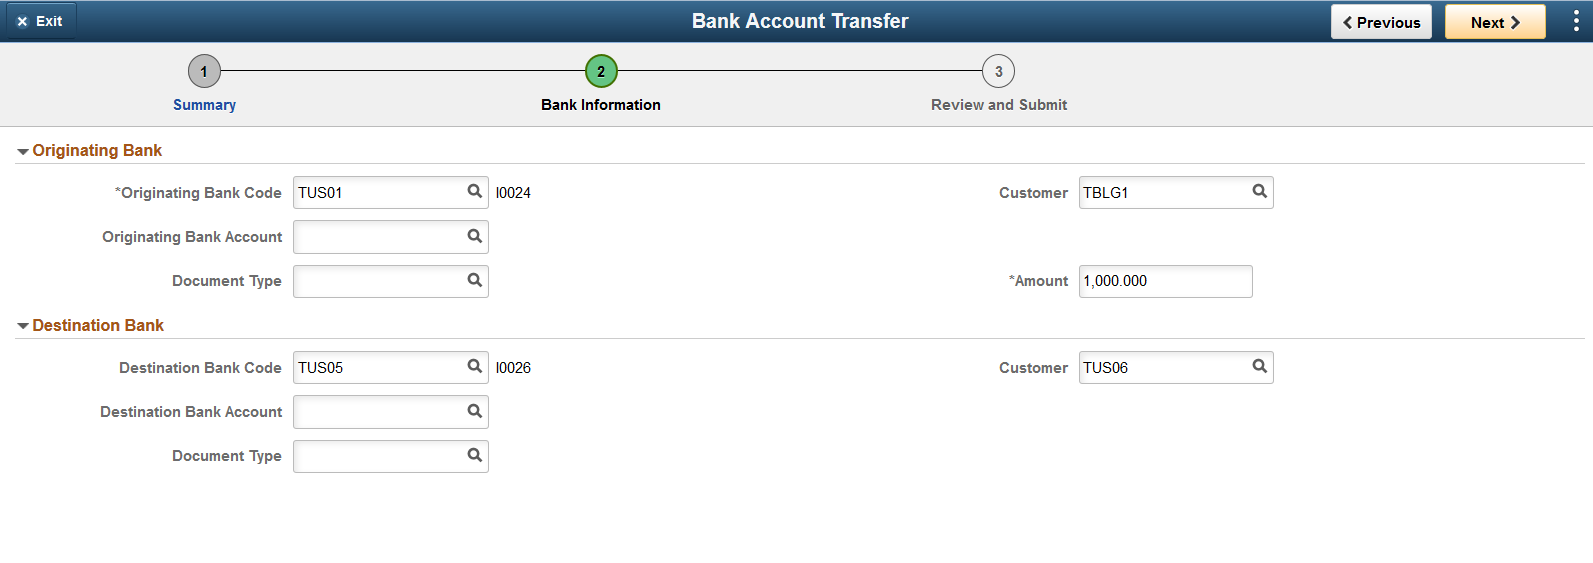 Internal Bank Account Transfer Bank Information Page